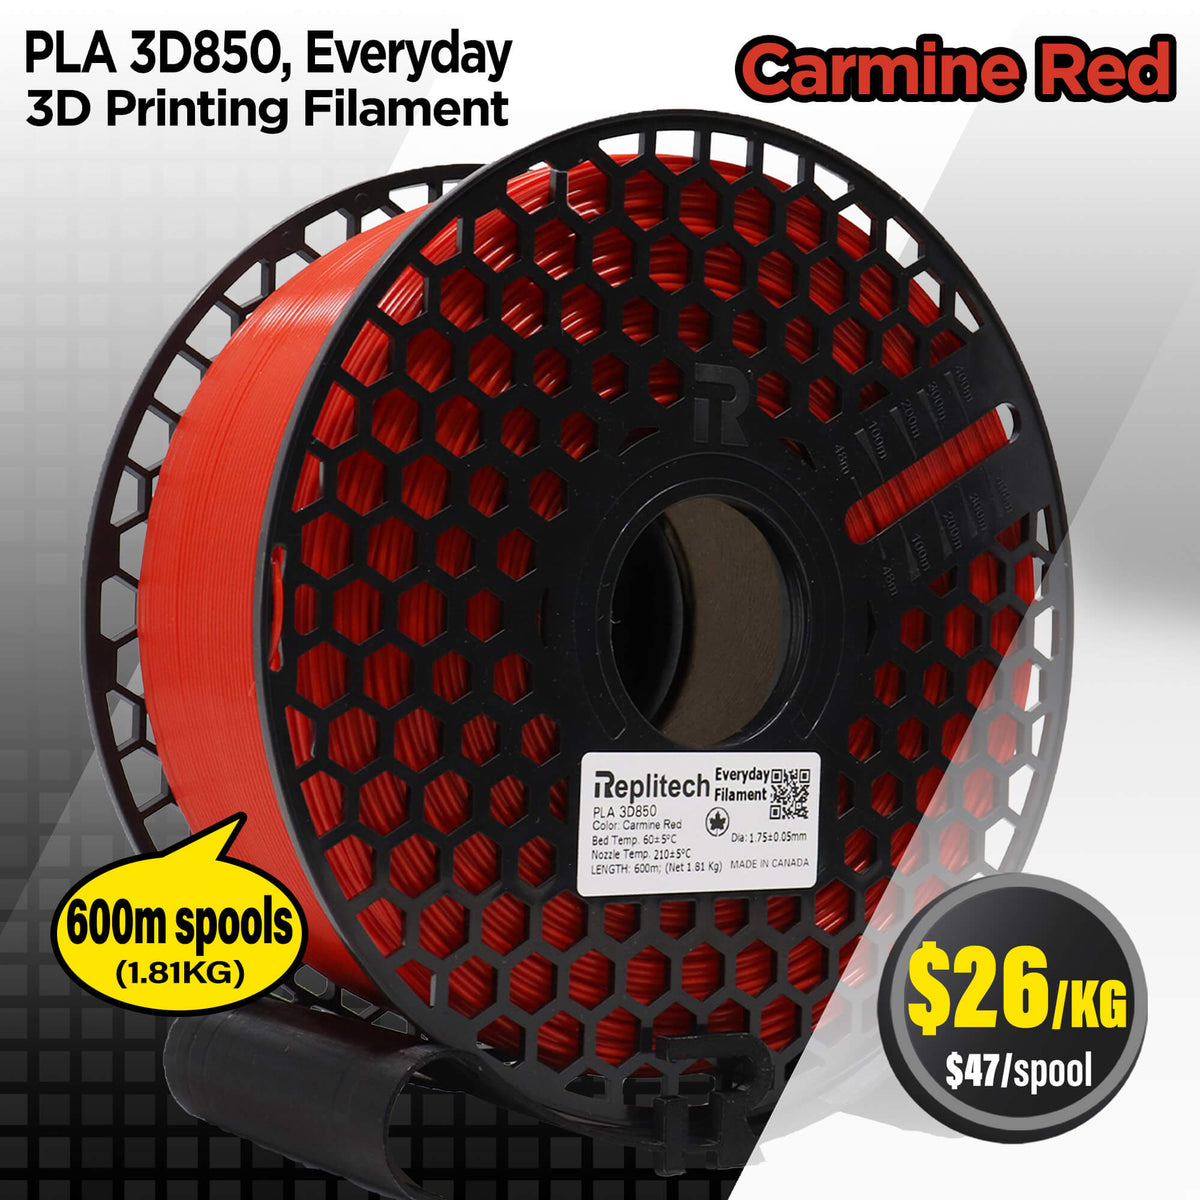 PLA 3D850 Everyday Carmine Red